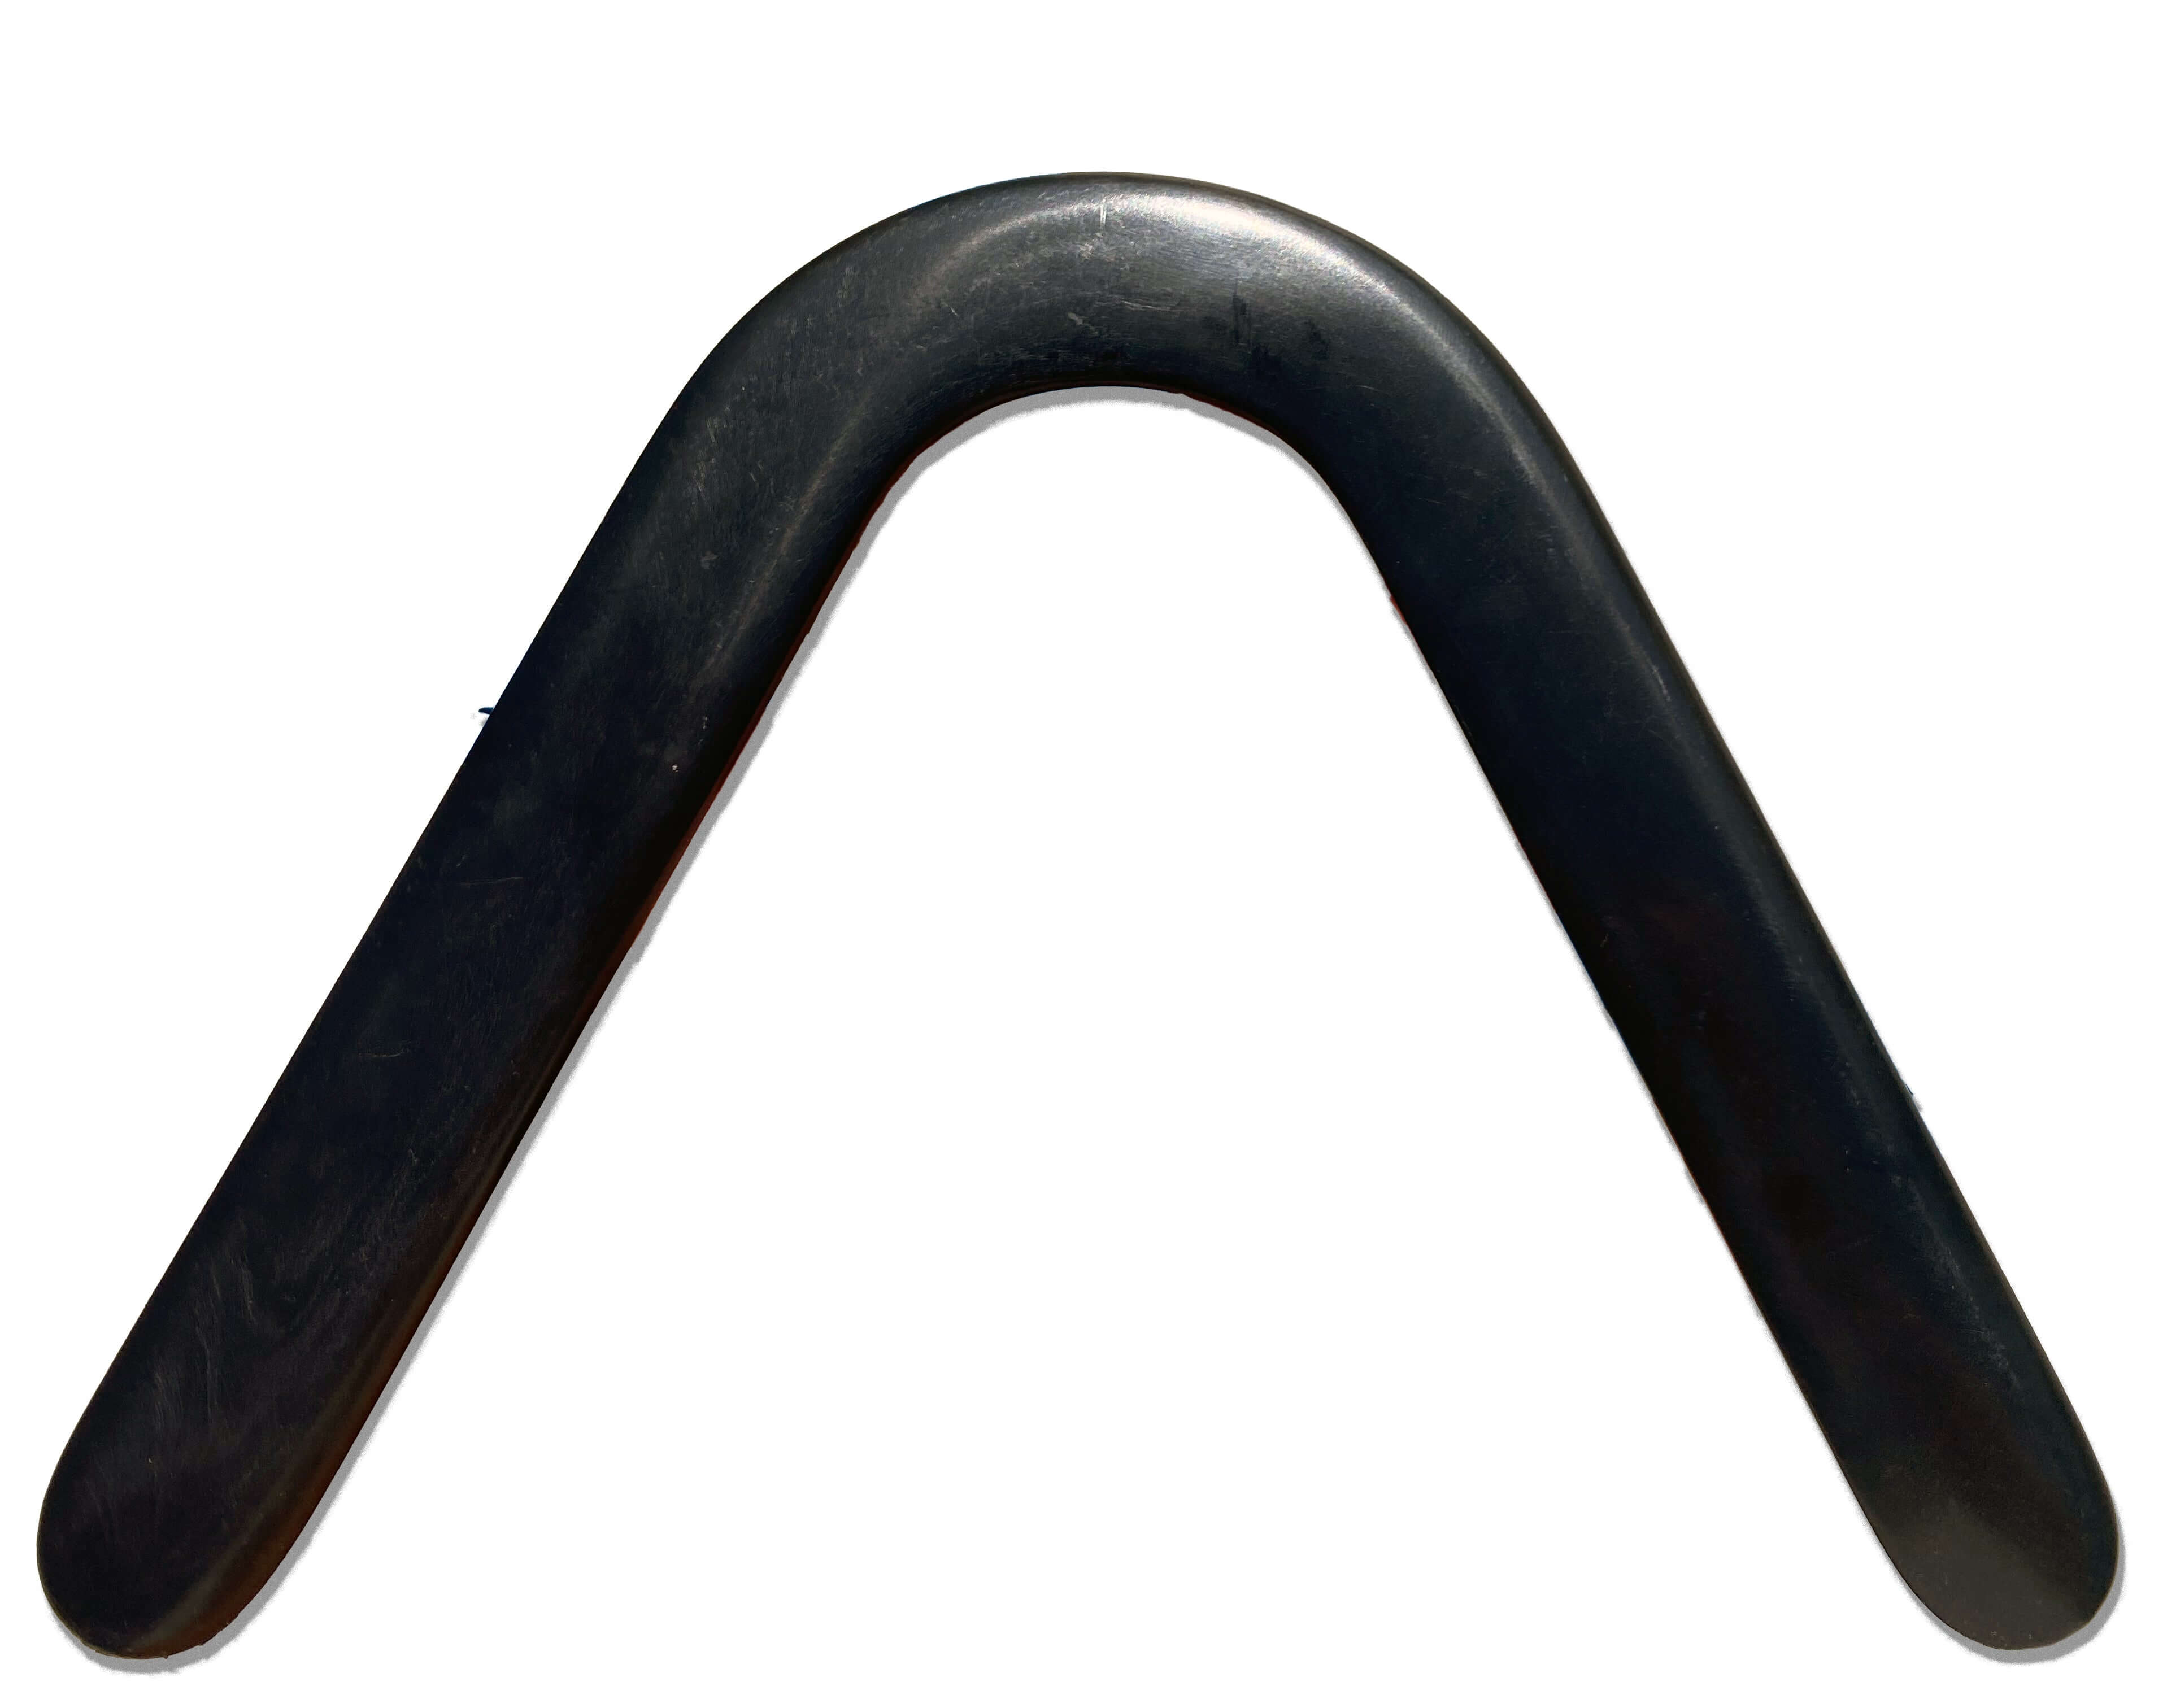 Spinback 44 RH Large U Shaped Boomerang - Composite Carbon Fiber and Plastic